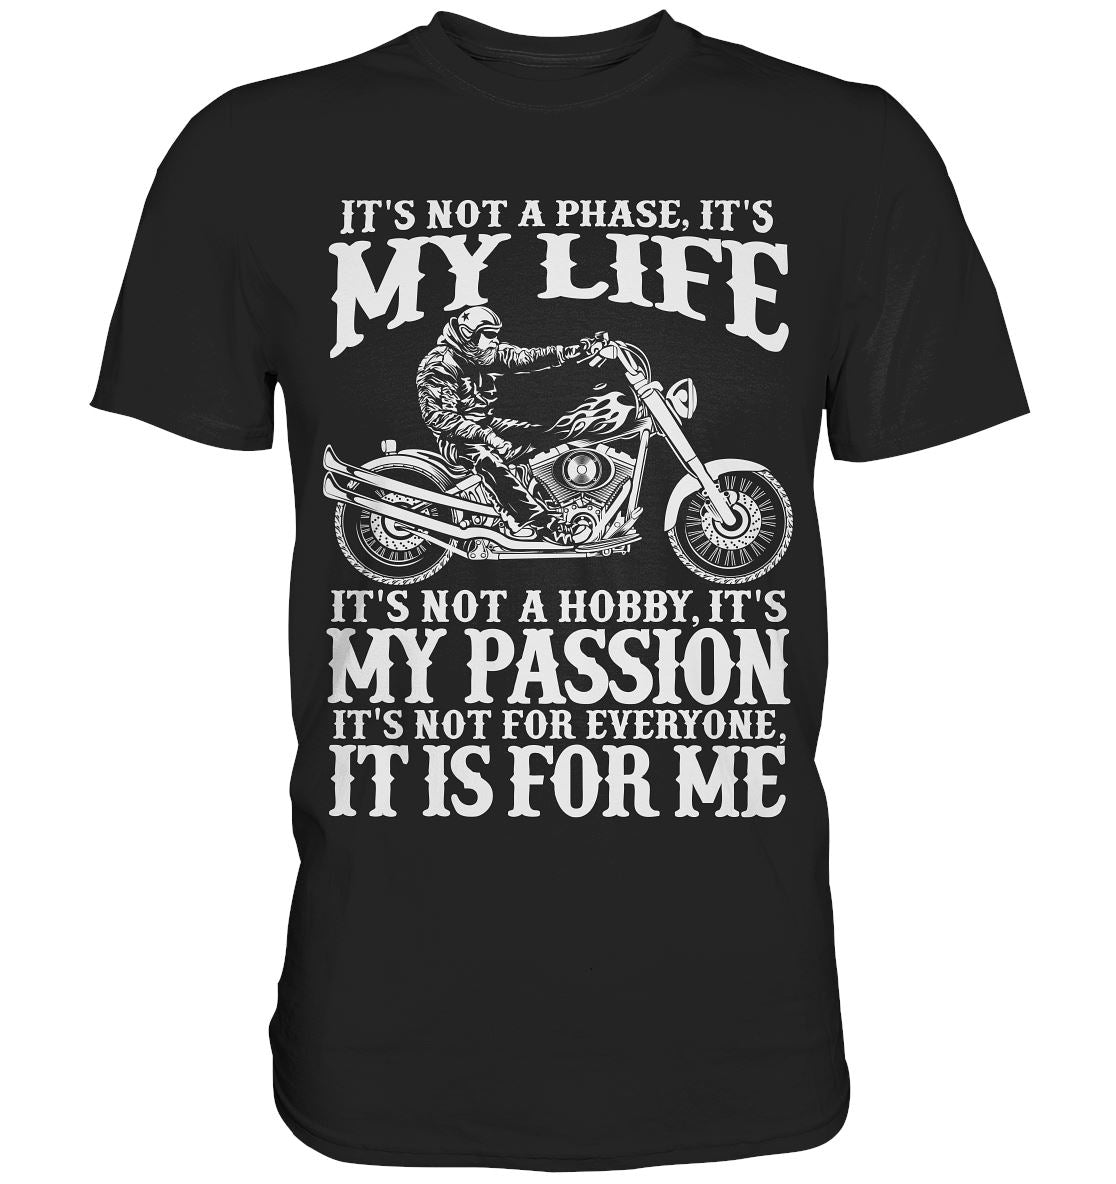 MY LIFE - Premium Shirt - BINYA